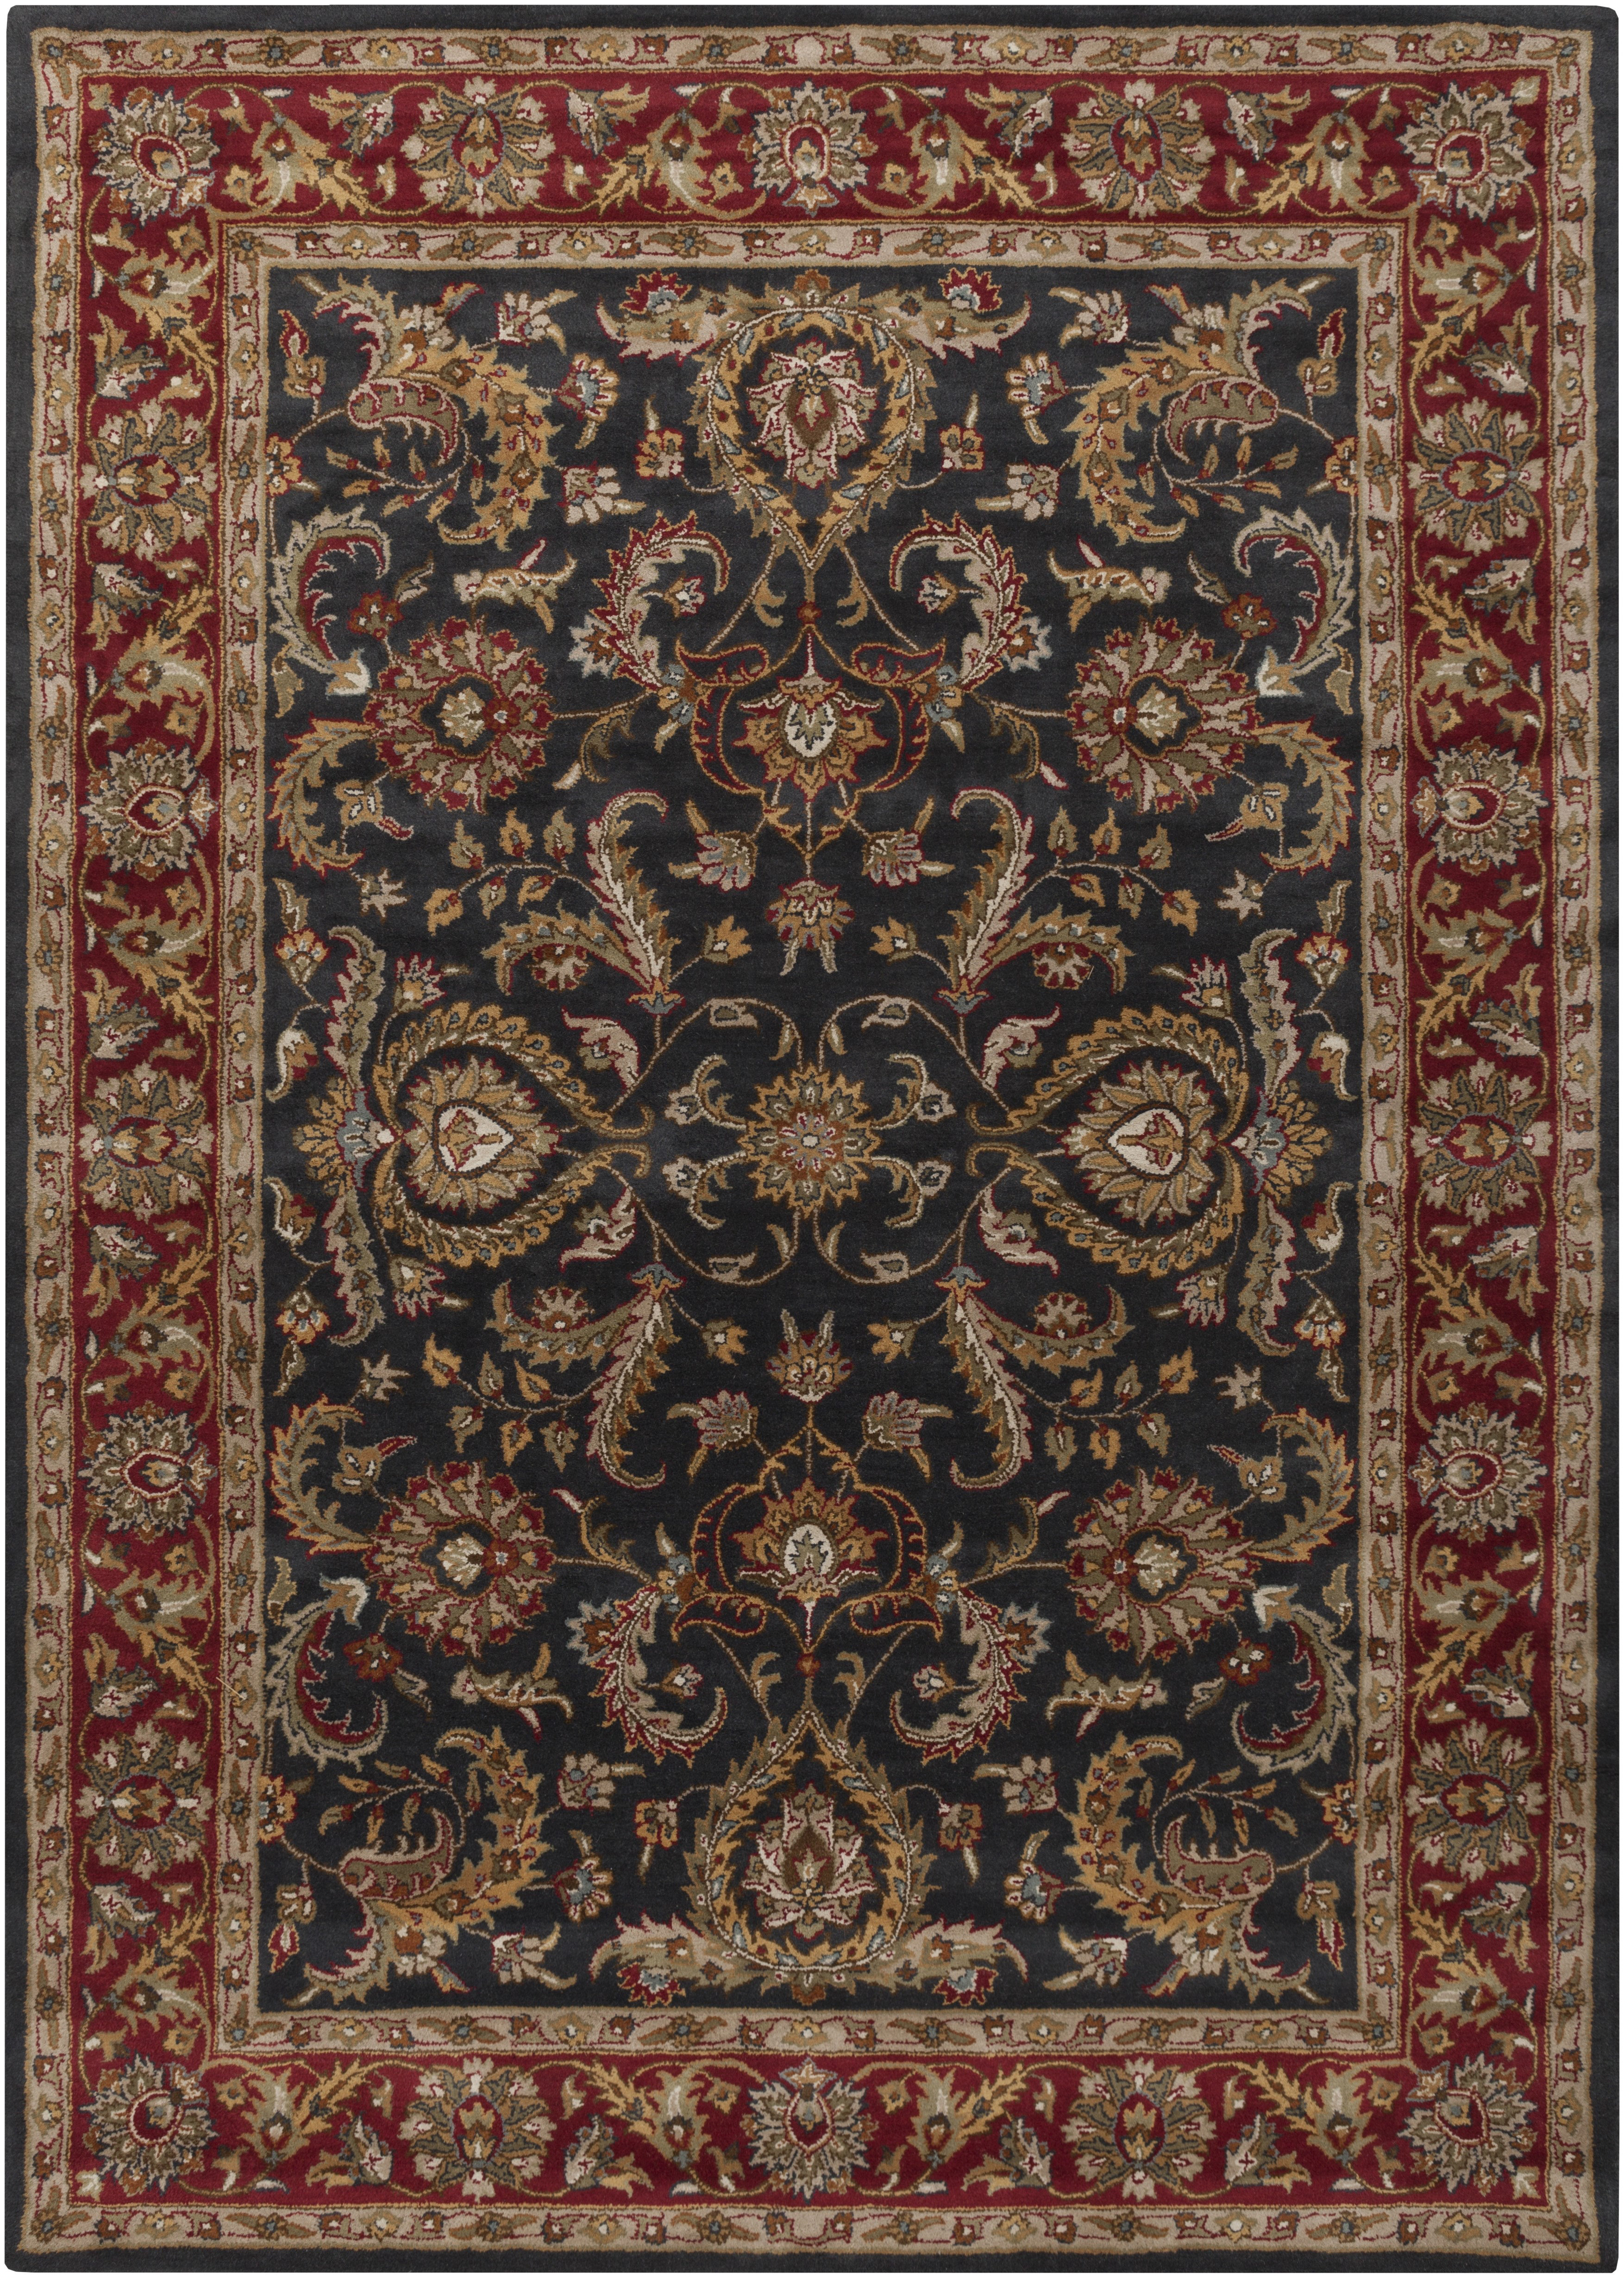 ft 2' 11 x 5' Traditional Persian Chobi Design Handmade Agra Rug Wool Pale Brown 